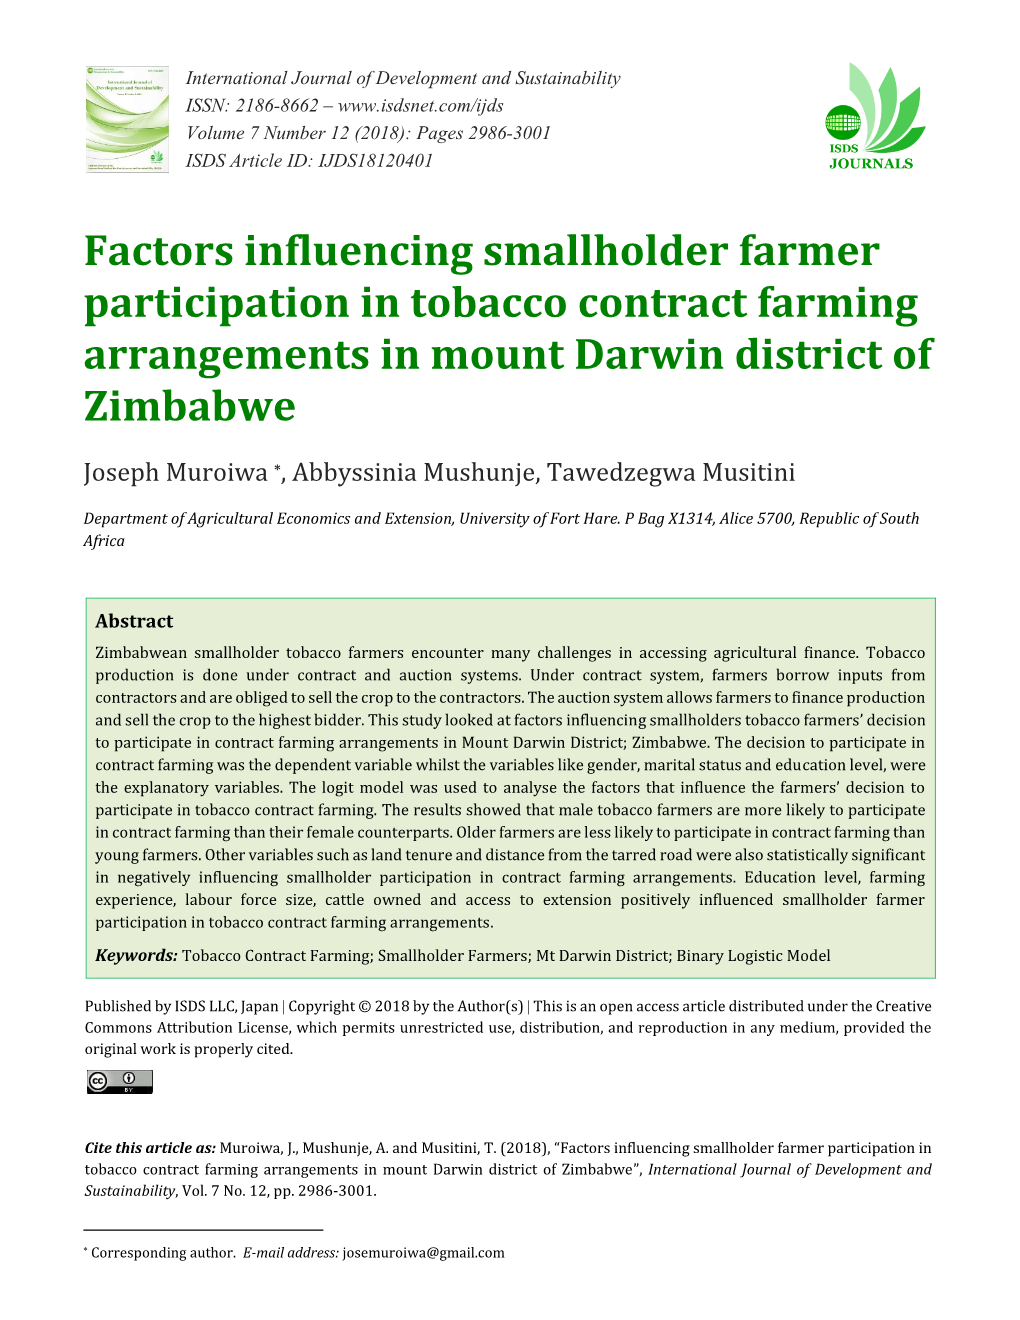 Factors Influencing Smallholder Farmer Participation in Tobacco Contract Farming Arrangements in Mount Darwin District of Zimbabwe